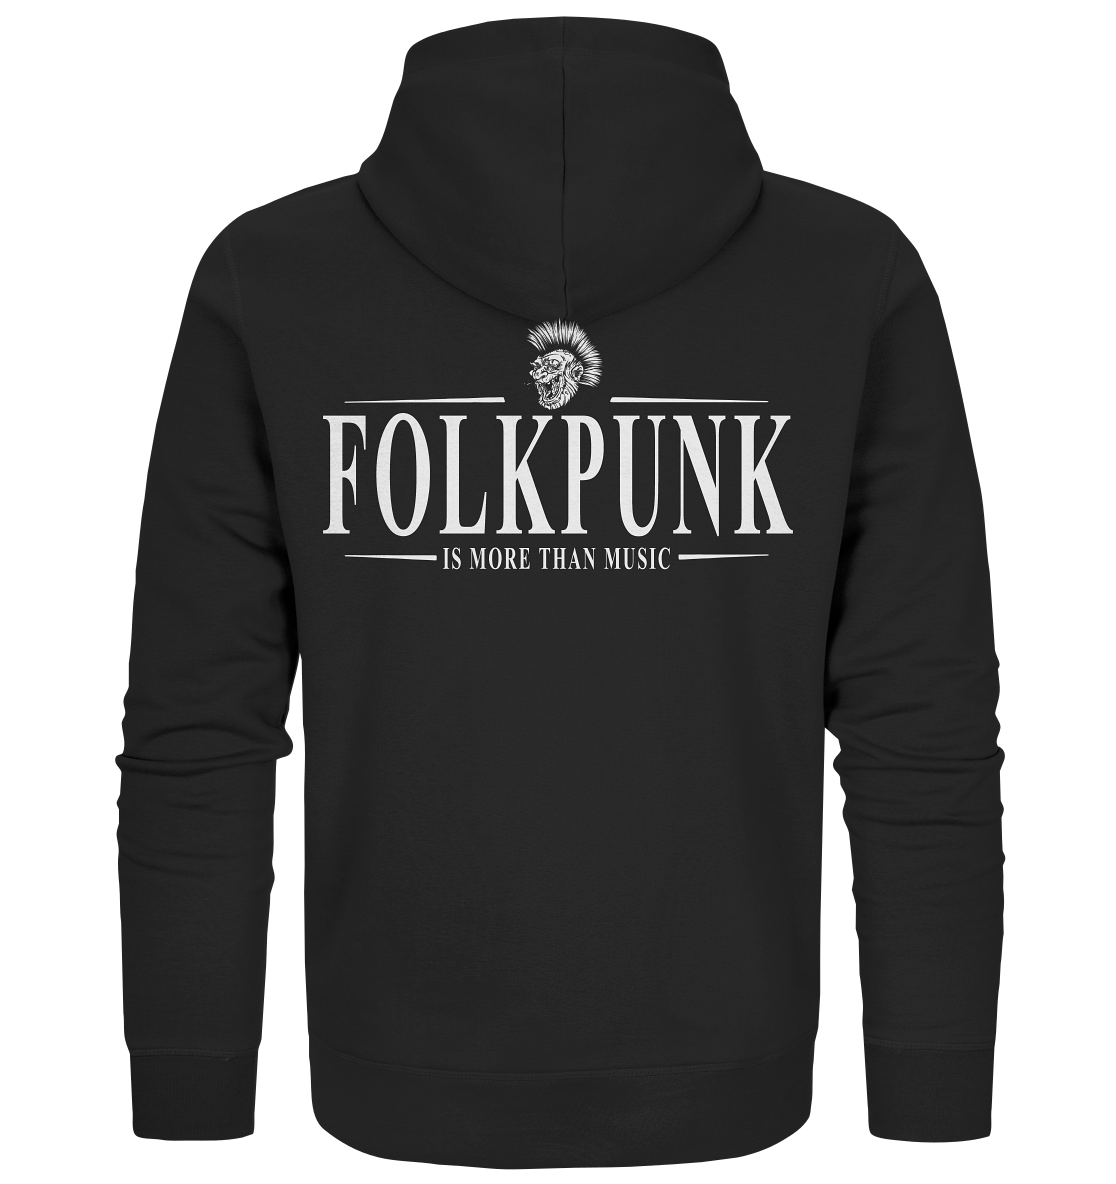 Folkpunk "Is More Than Music" - Organic Zipper